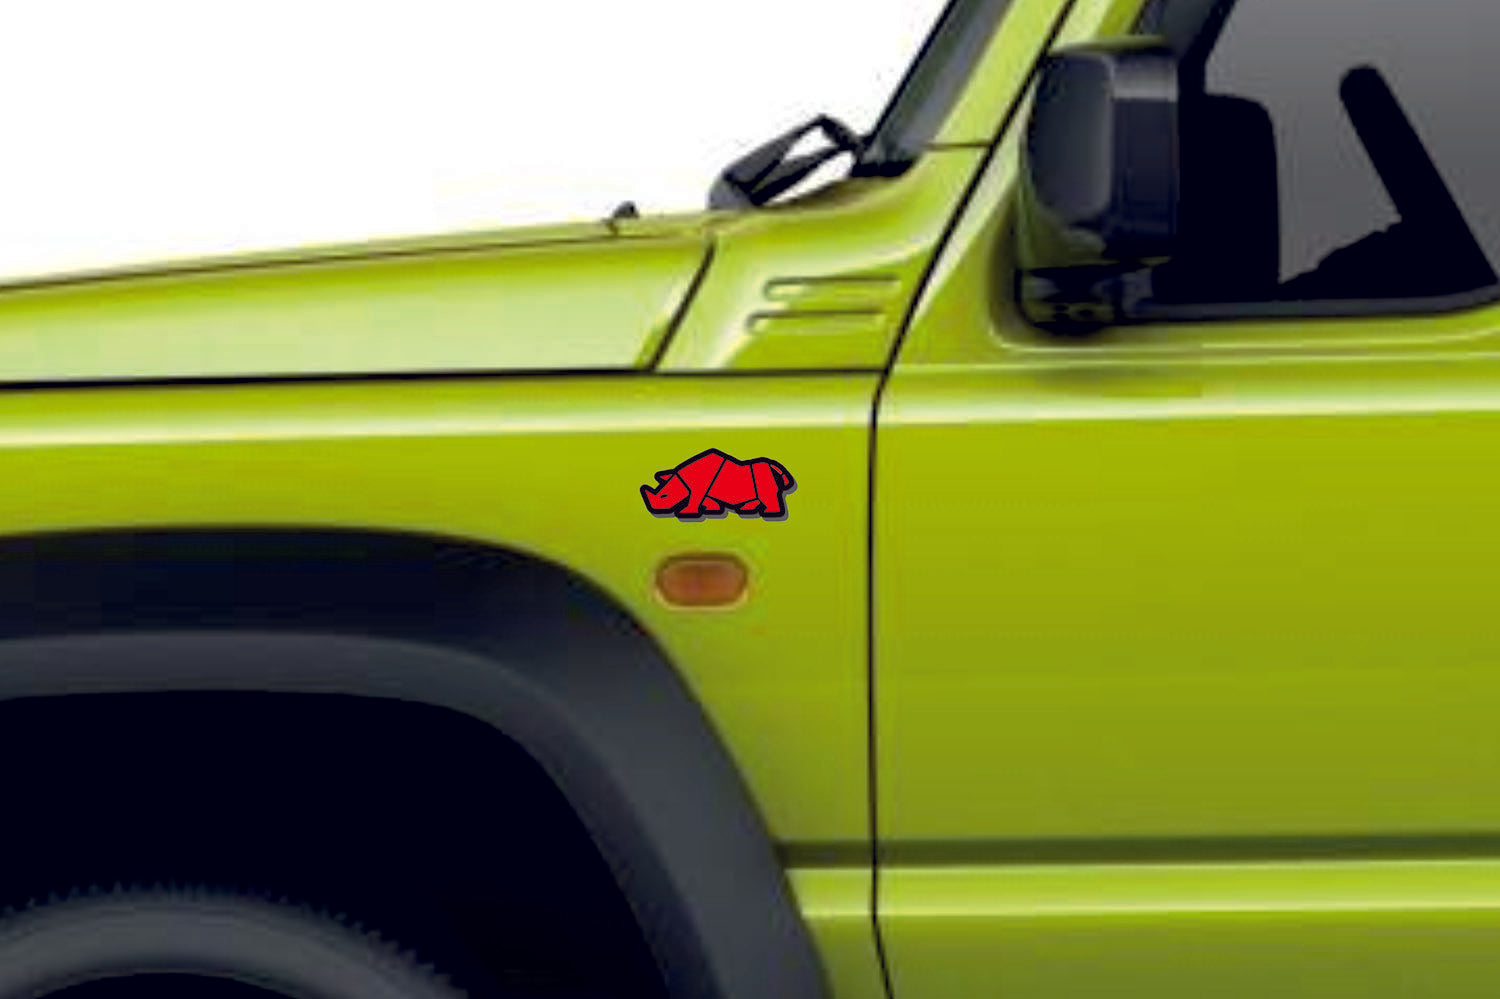 Susuki emblem badge for fenders with Jimny Rhino logo - decoinfabric